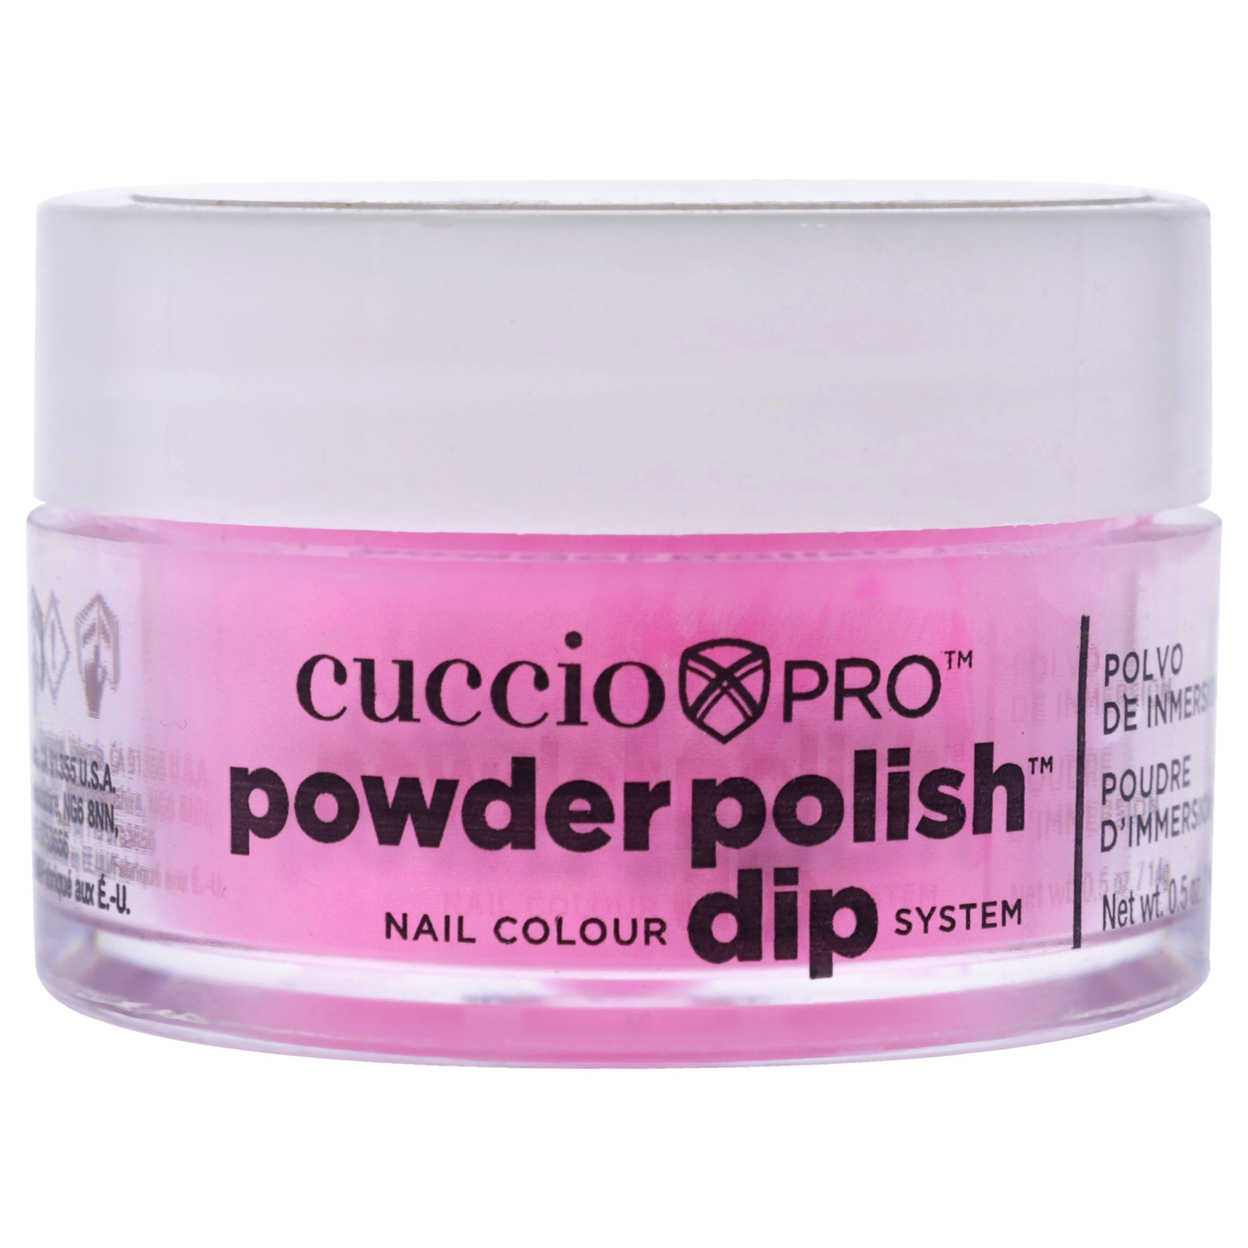 Cuccio Colour Pro Powder Polish Nail Colour Dip System - Bright Neon Pink Nail Powder 0.5 Oz